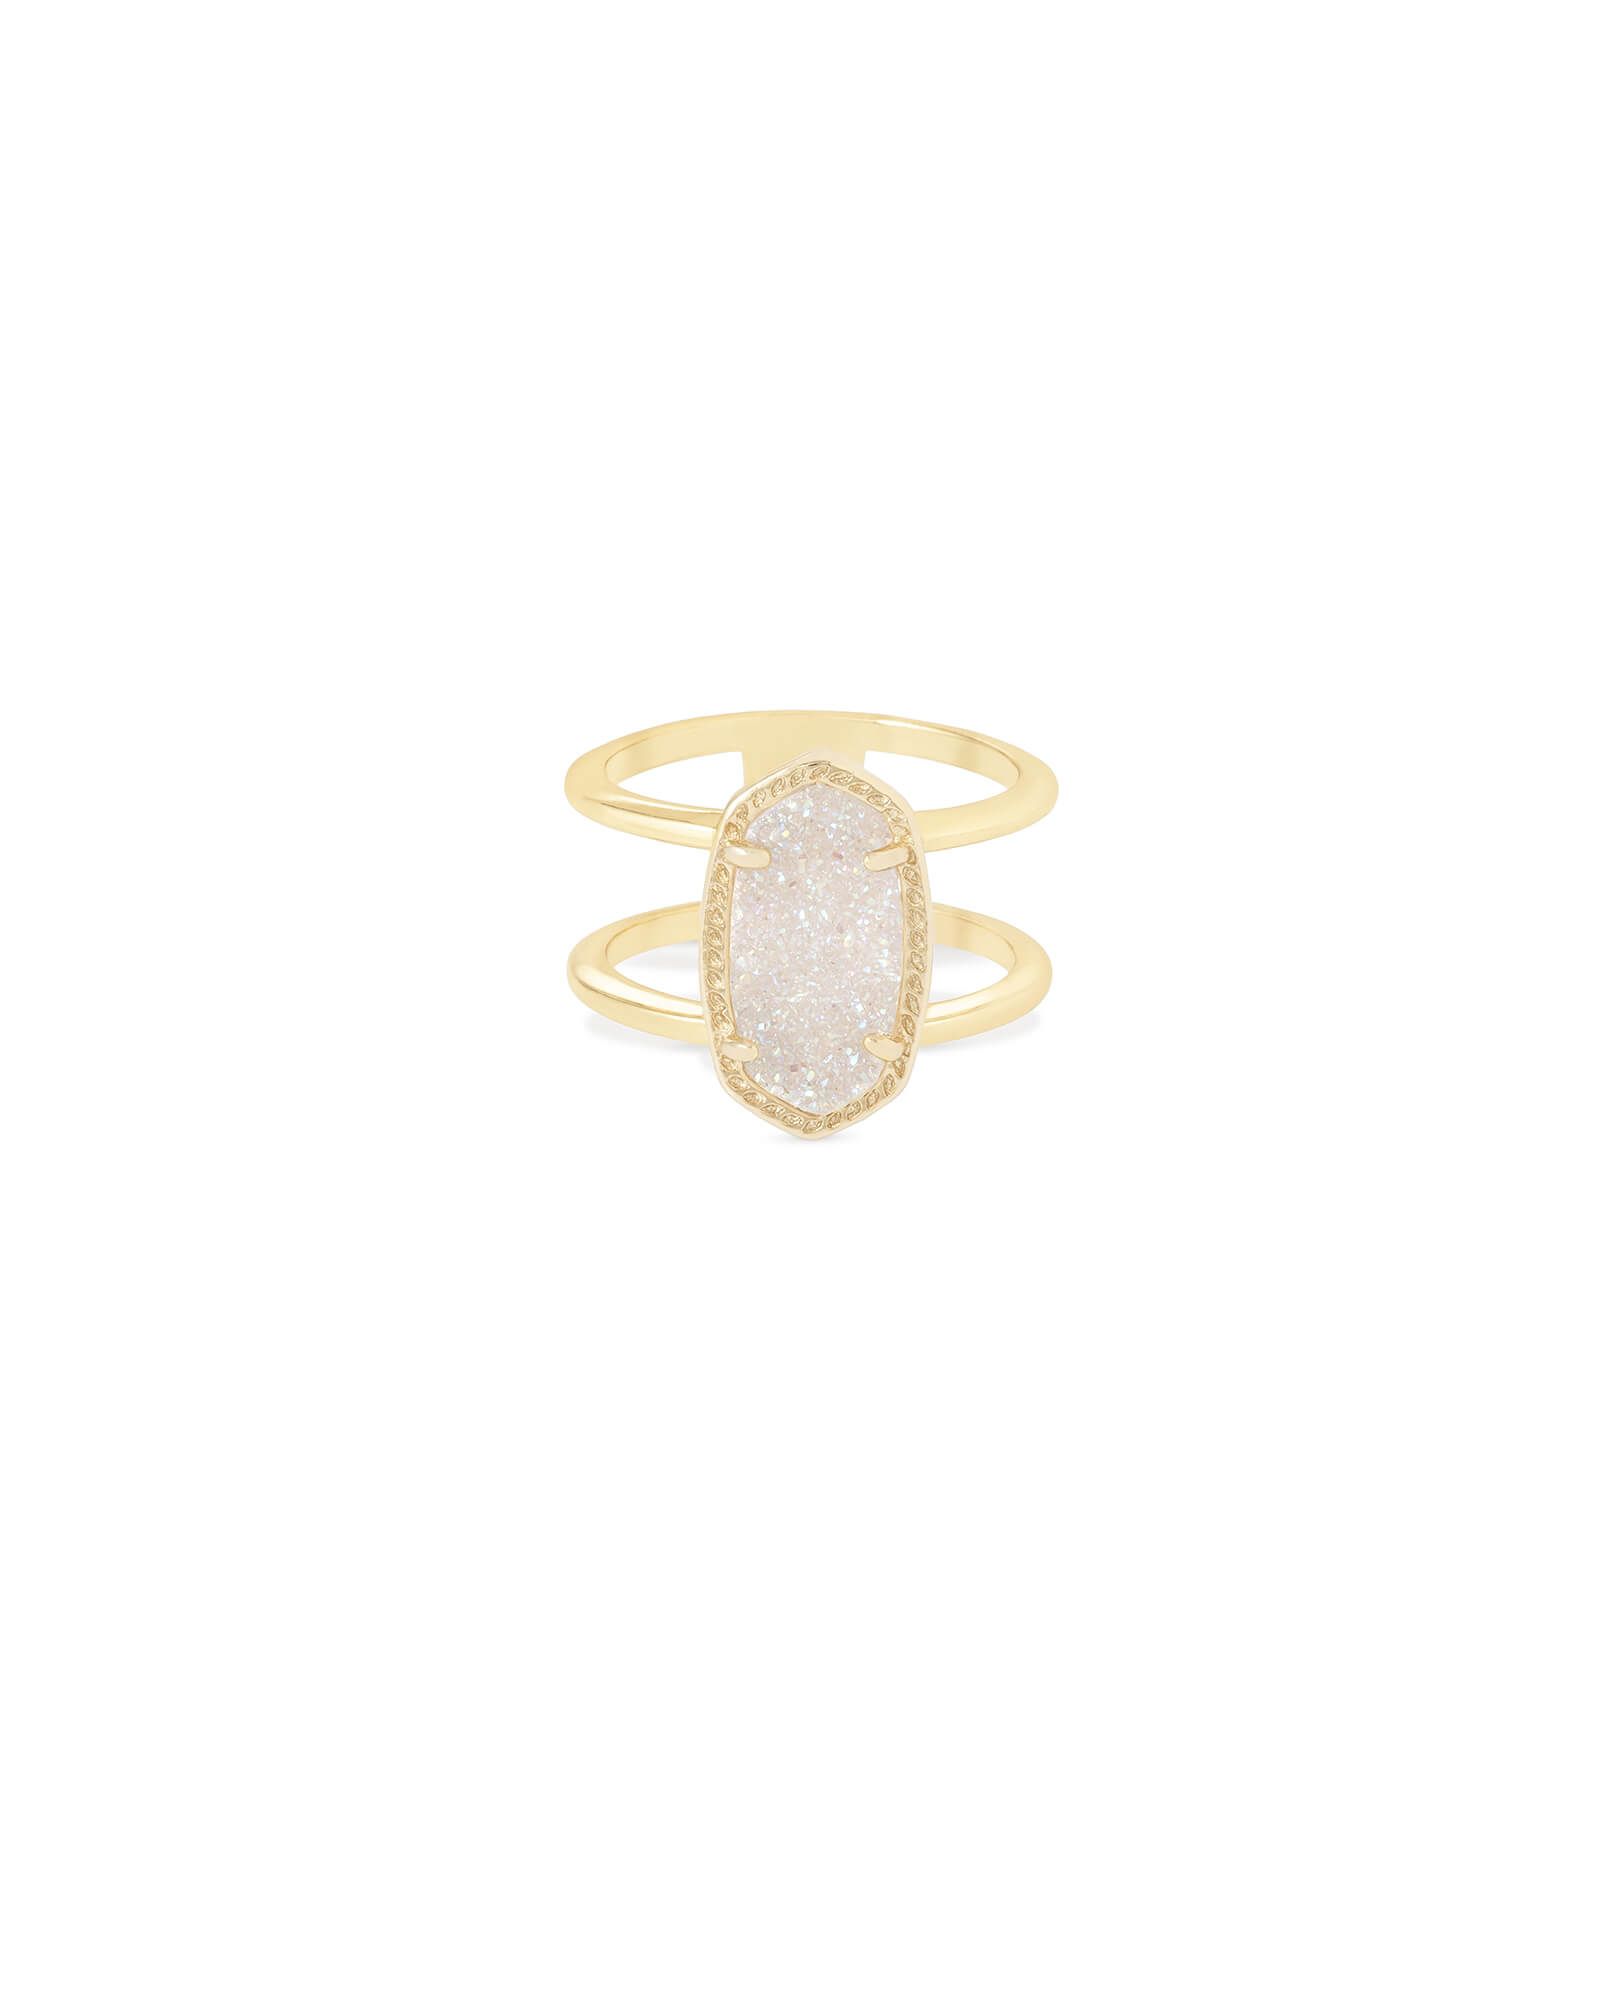 Elyse Gold Ring in Iridescent Drusy - 8 | Kendra Scott